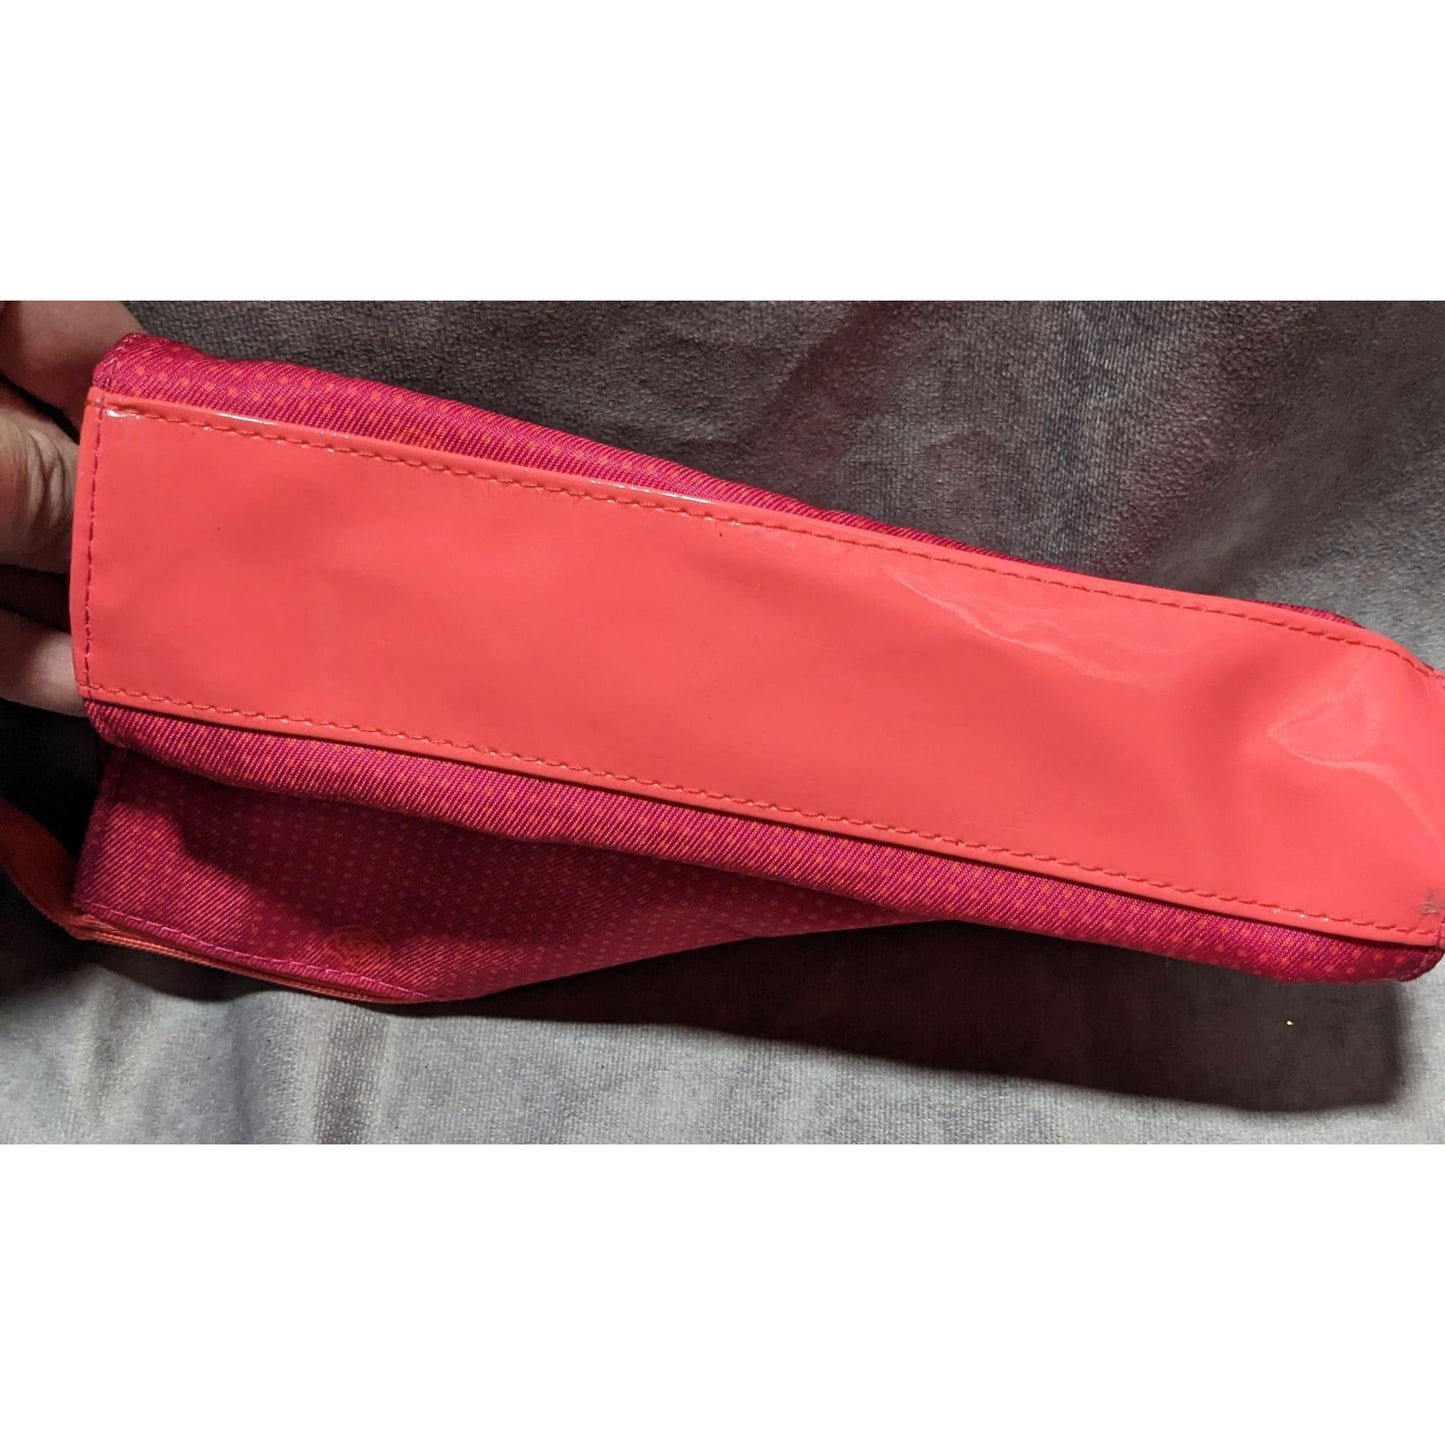 Lancome Paris Pink Floral Cosmetic Bag